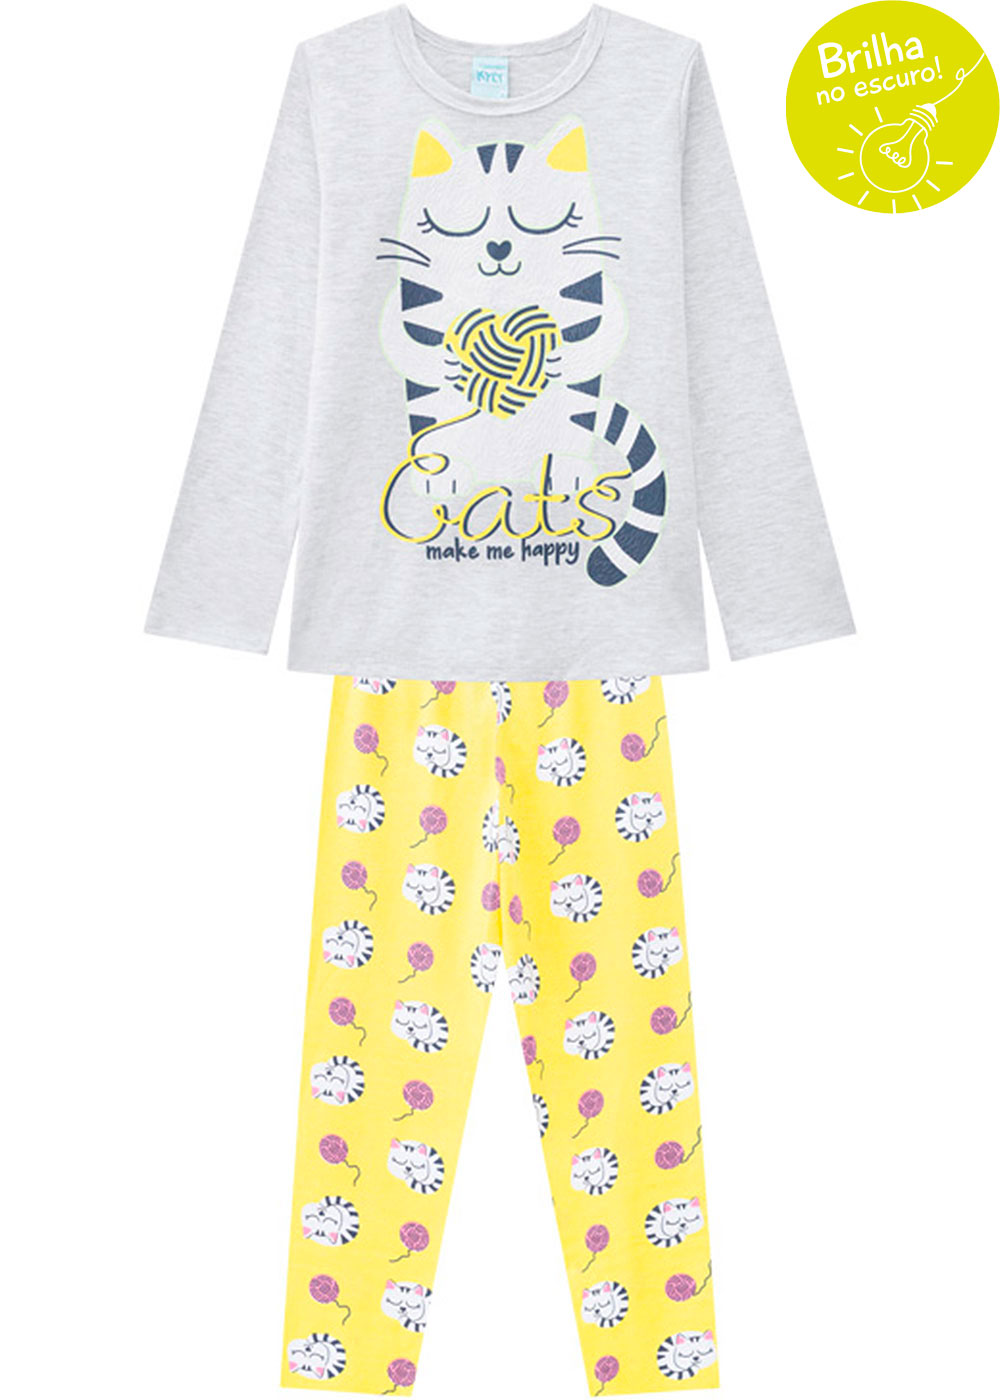 Pijama Infantil Feminino Inverno Brilha no Escuro Cats Cinza Kyly